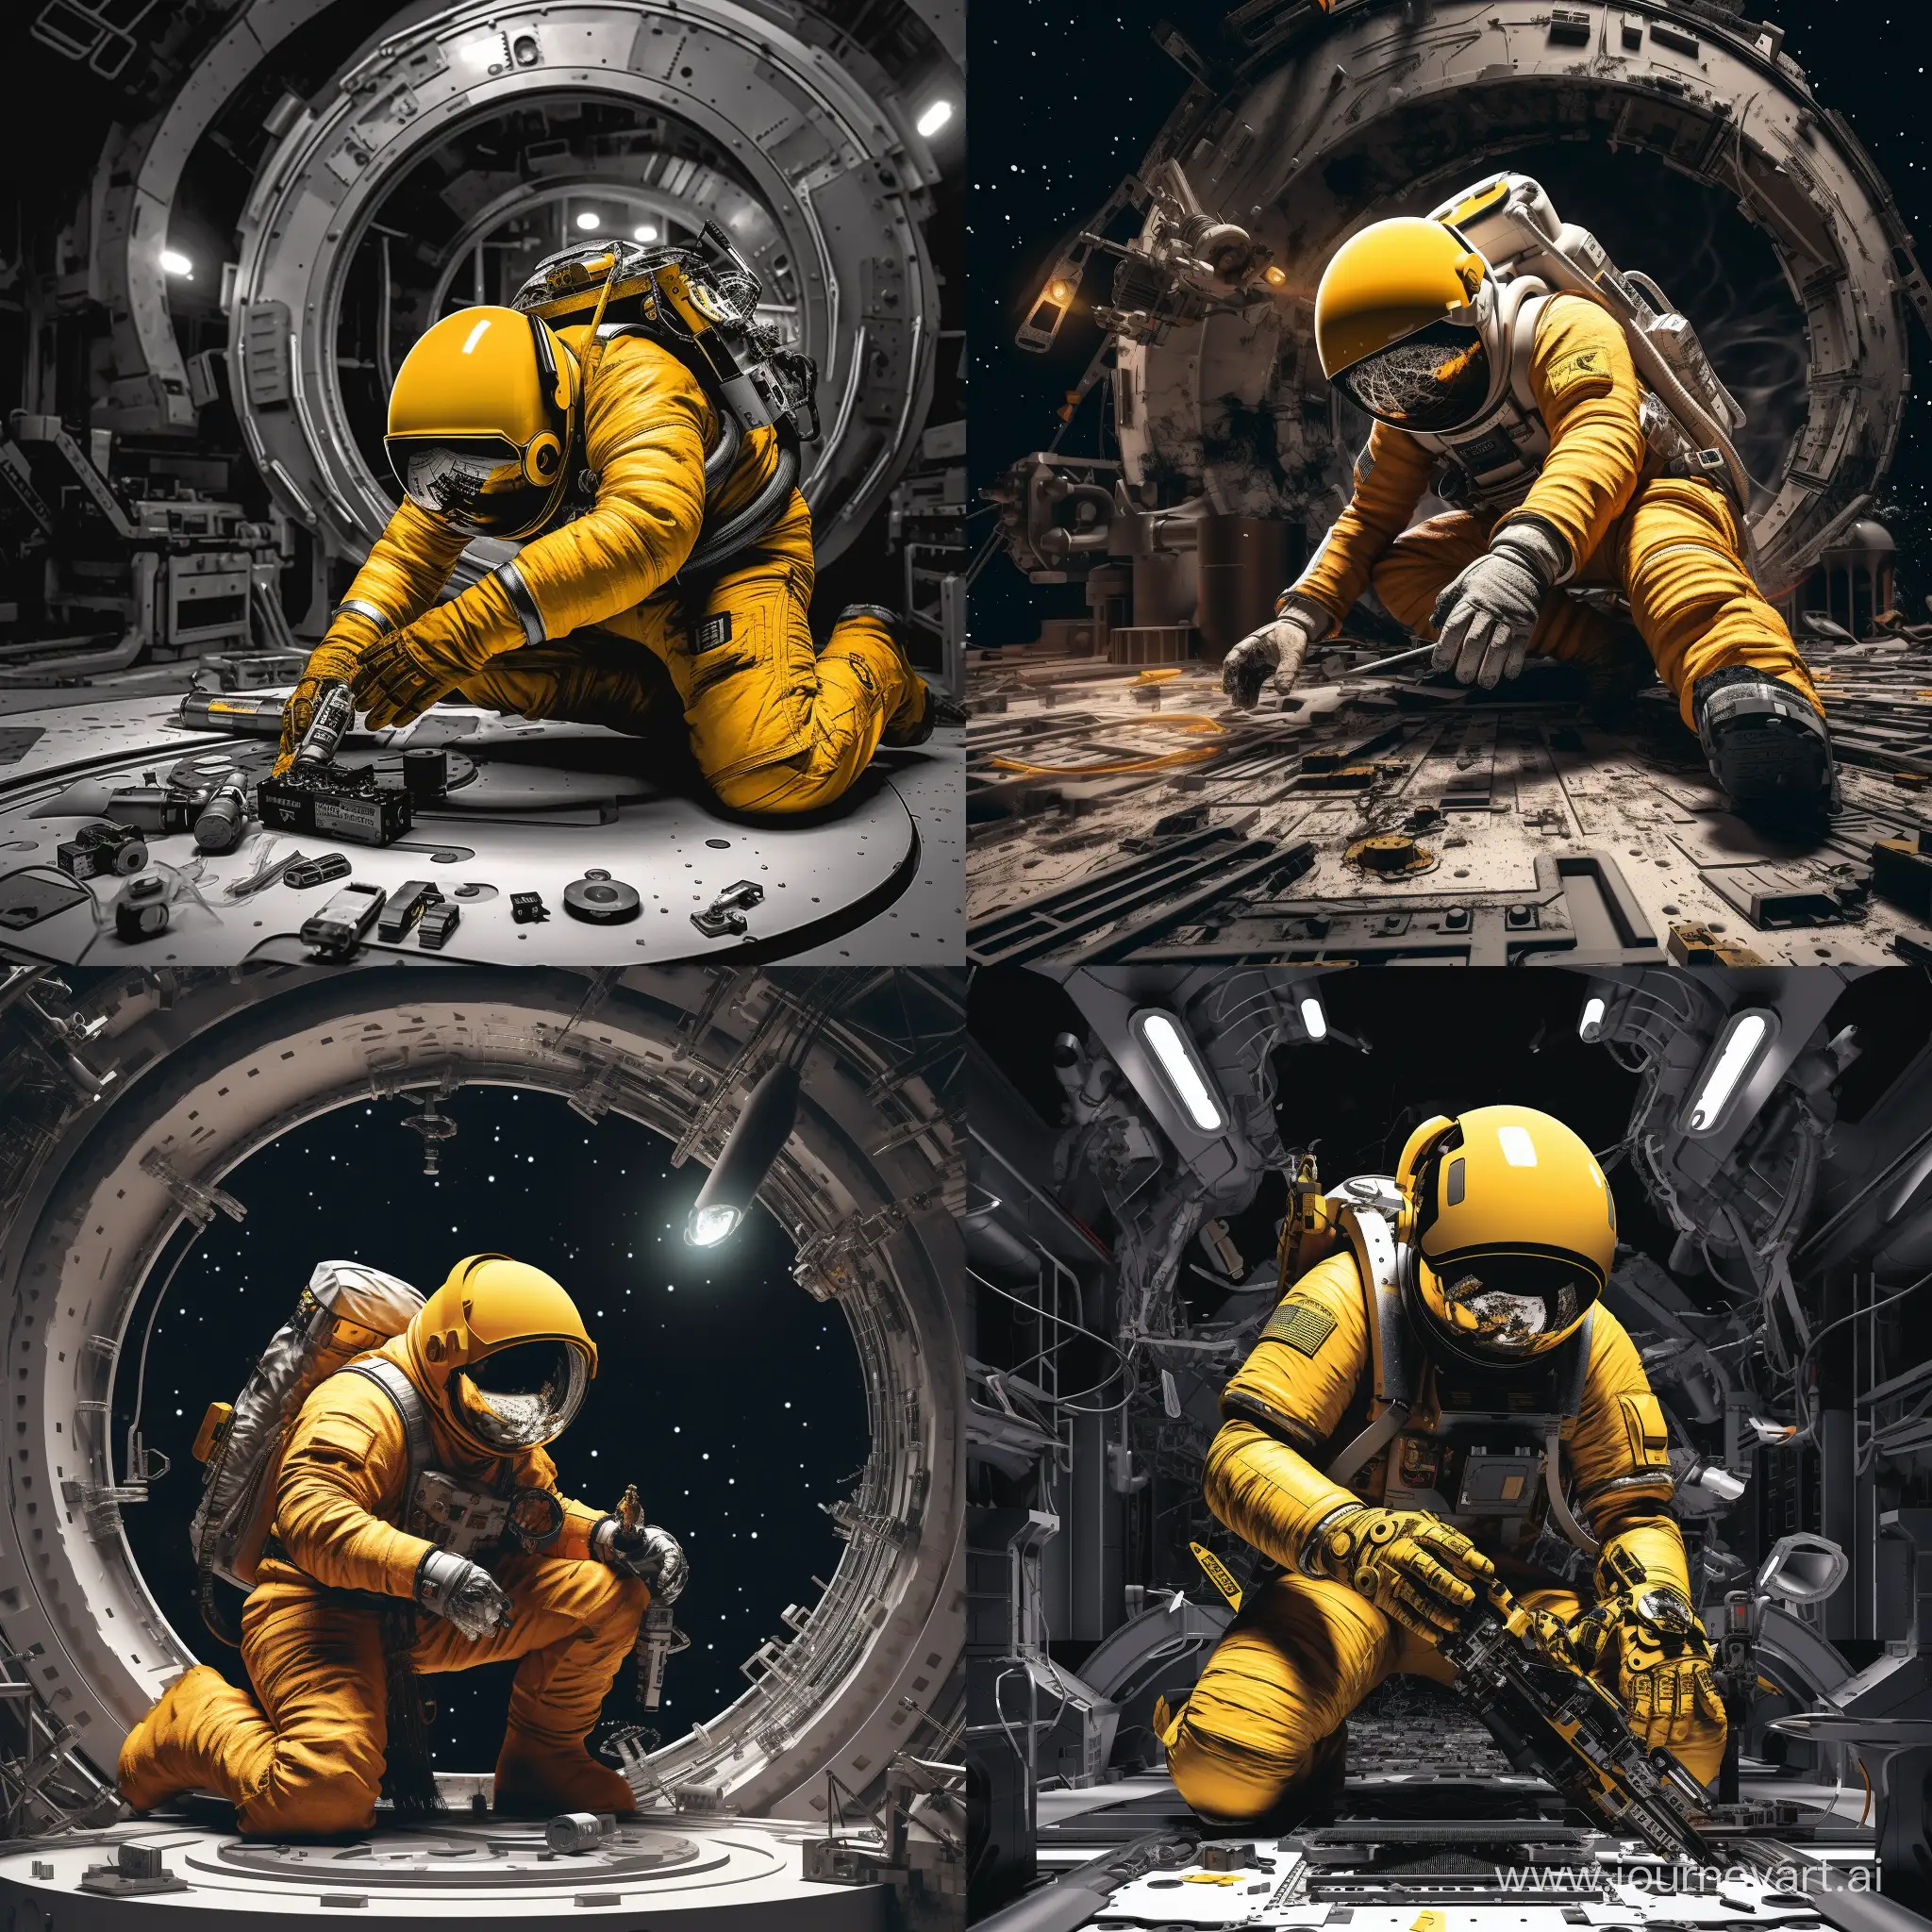 Astronaut-Repairs-Spaceship-in-Striking-Black-and-Yellow-Tones